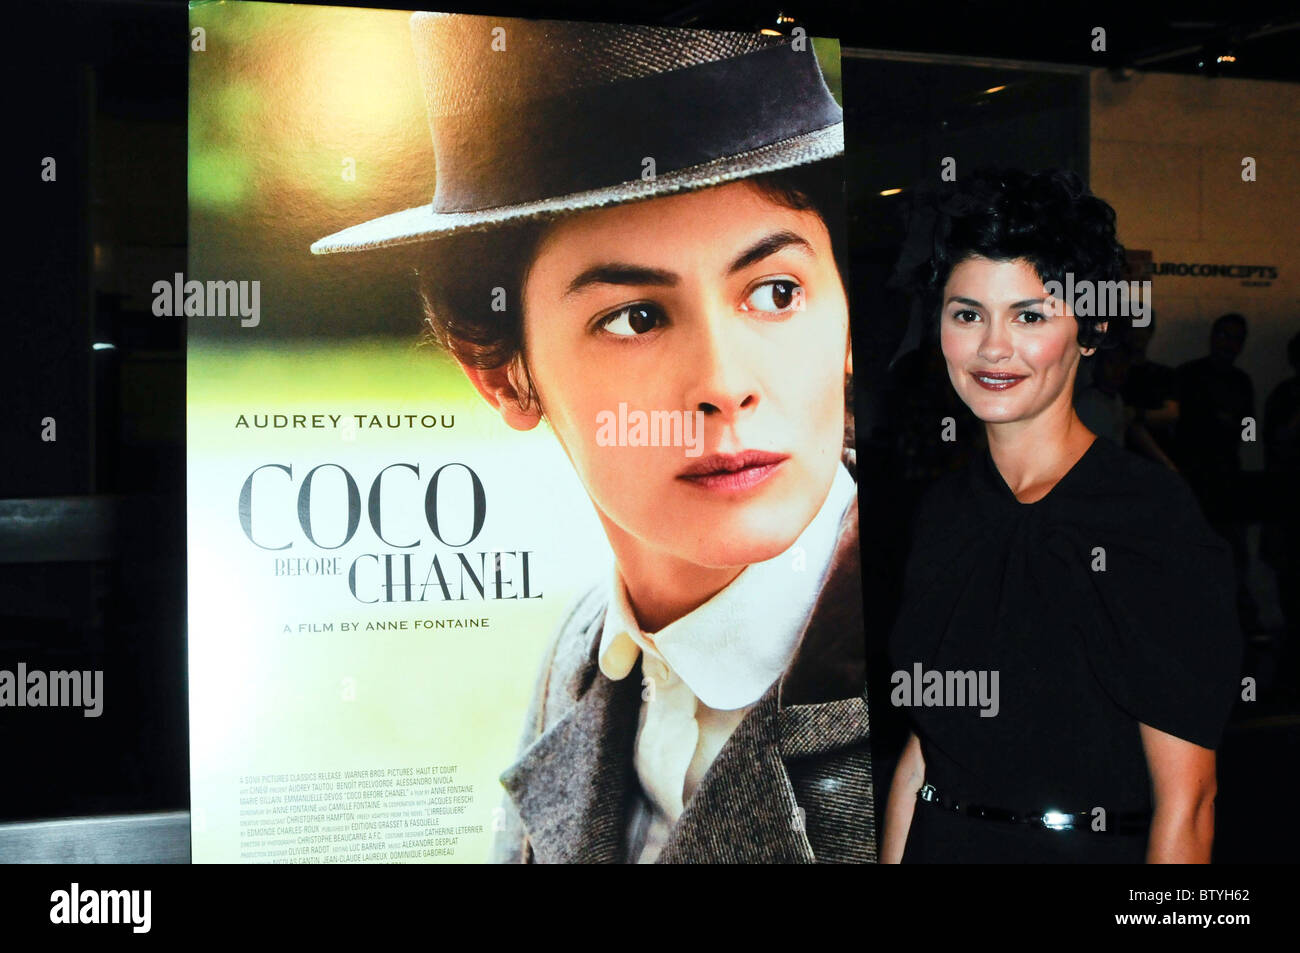 NPG x40051; Coco Chanel - Portrait - National Portrait Gallery